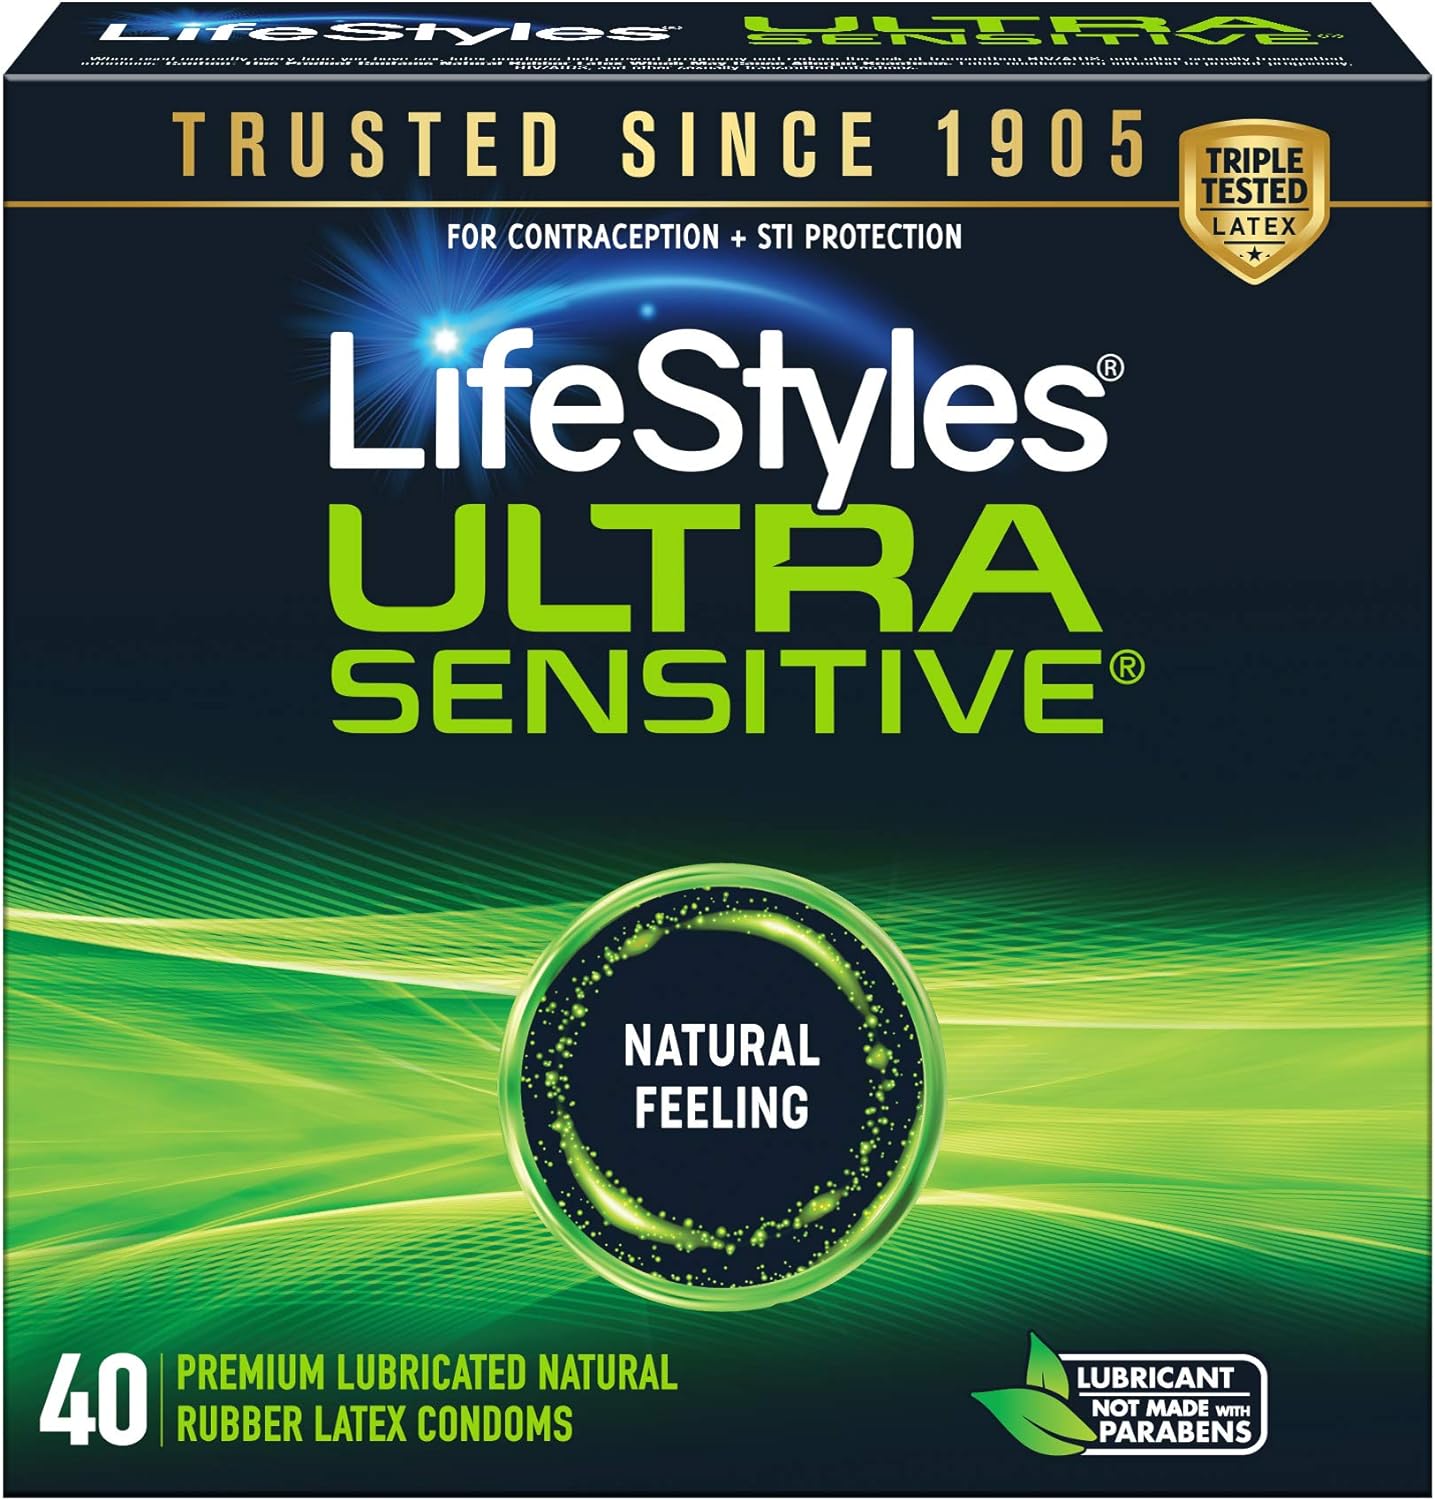 LifeStyles Ultra Sensitive Condoms Review